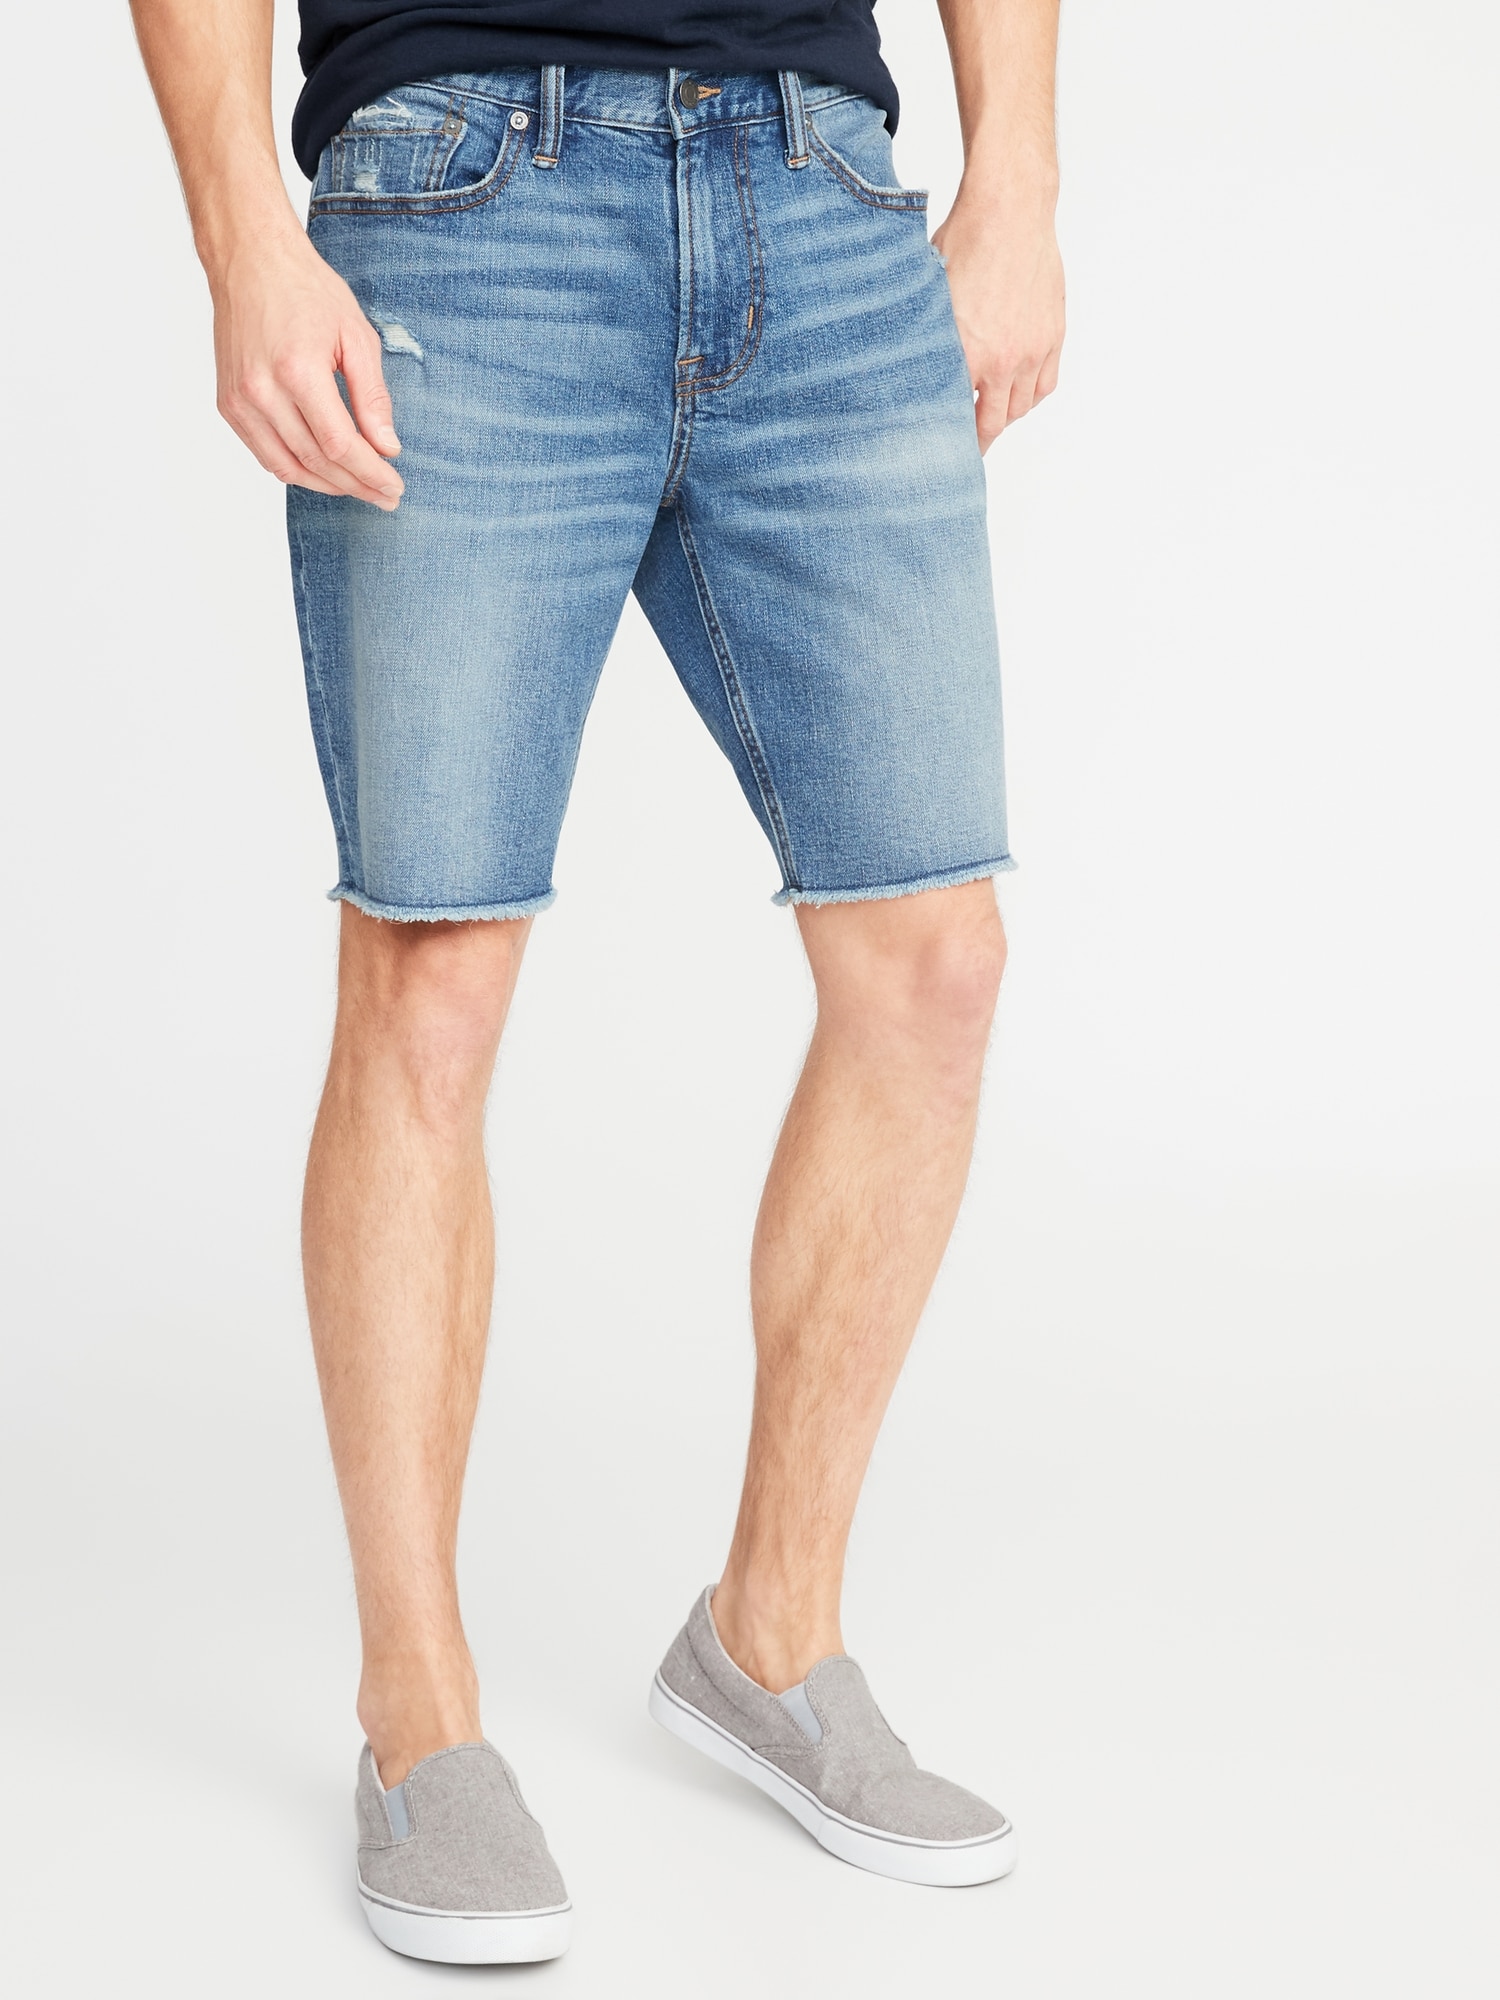 Slim Built-In Flex Distressed Cut-Off Jean Shorts for Men | Old Navy